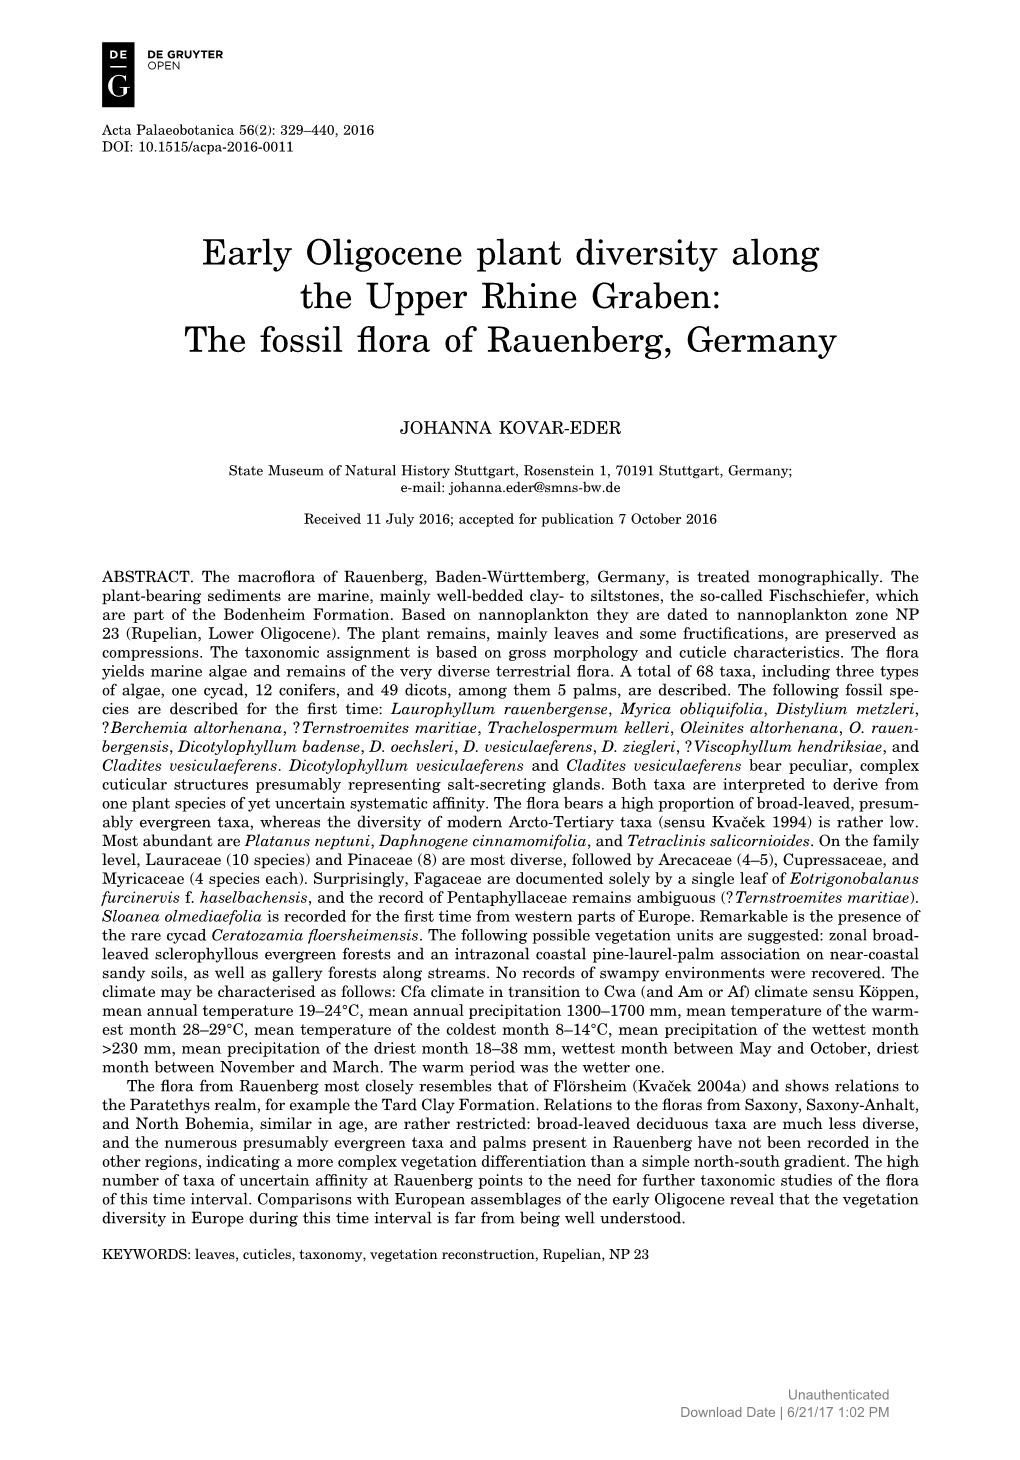 Early Oligocene Plant Diversity Along the Upper Rhine Graben: the Fossil Flora of Rauenberg, Germany